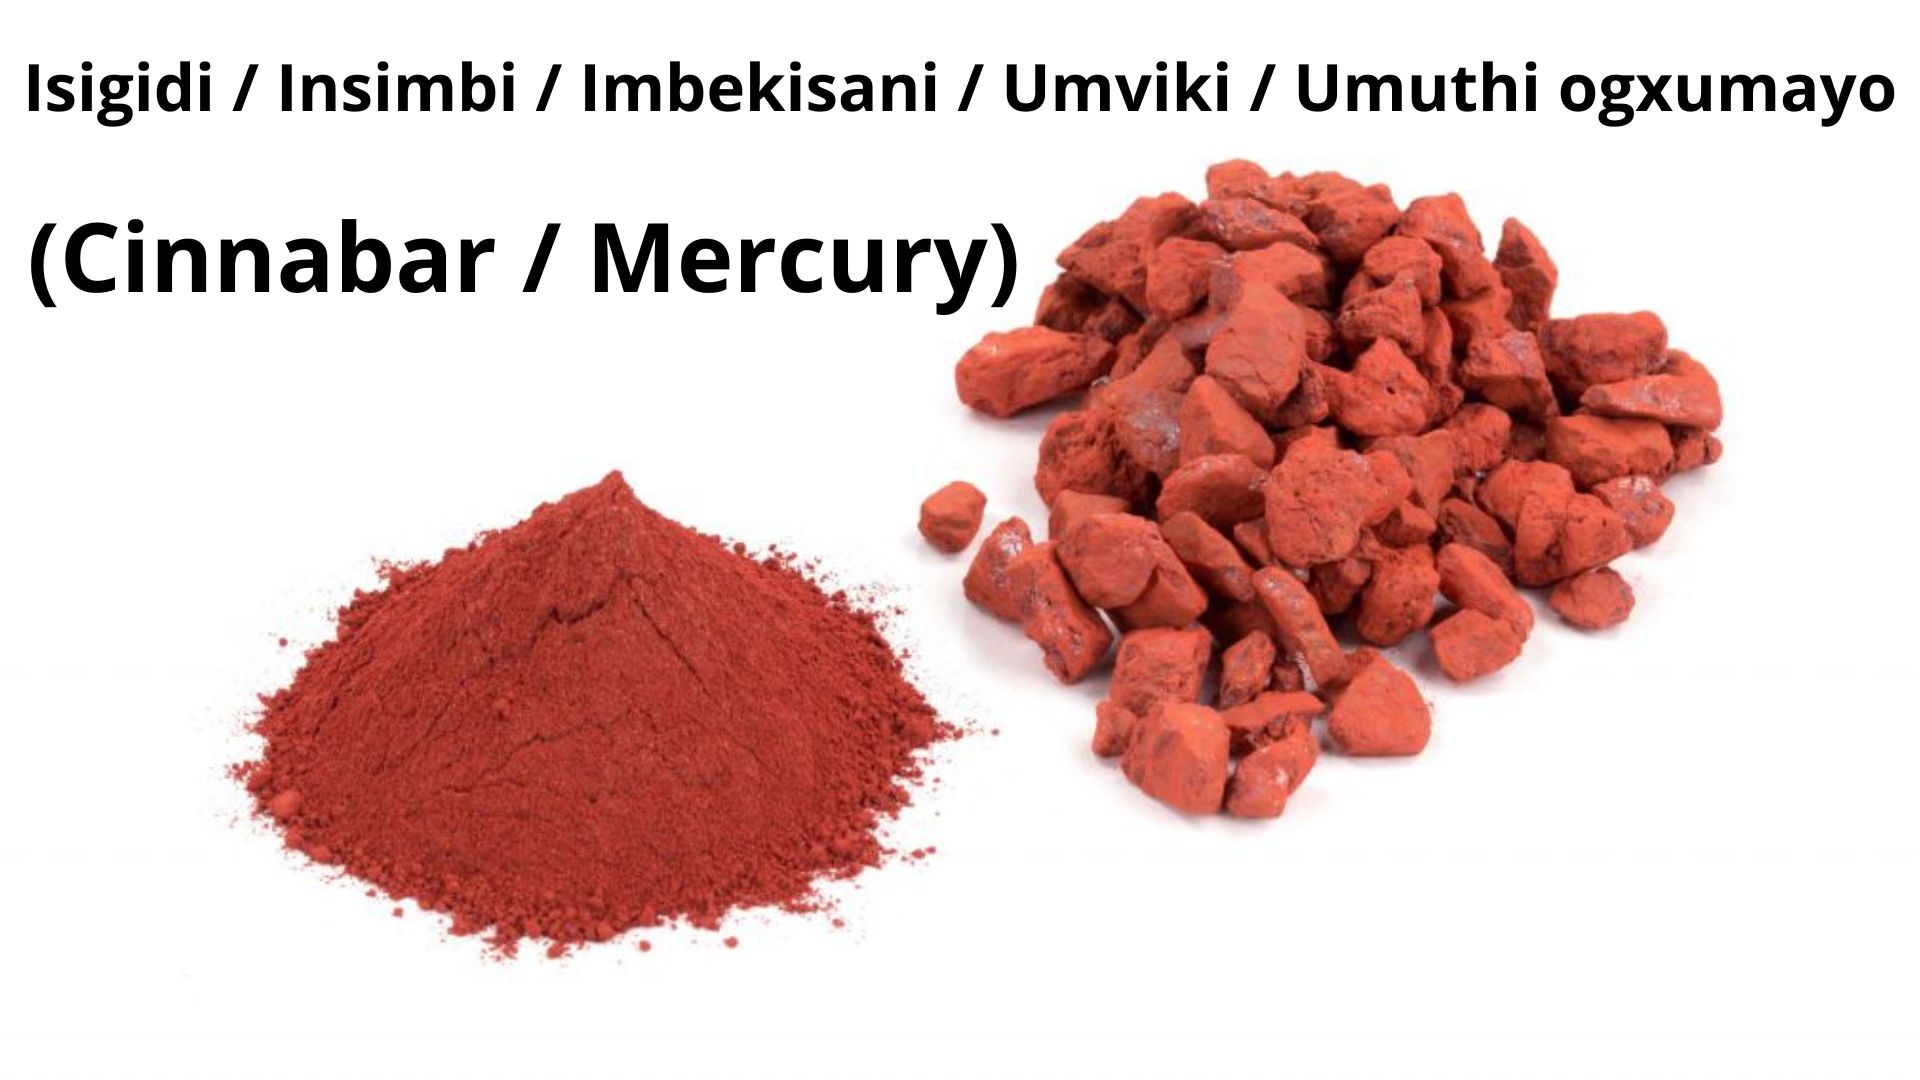 Cinnabar / Mercury